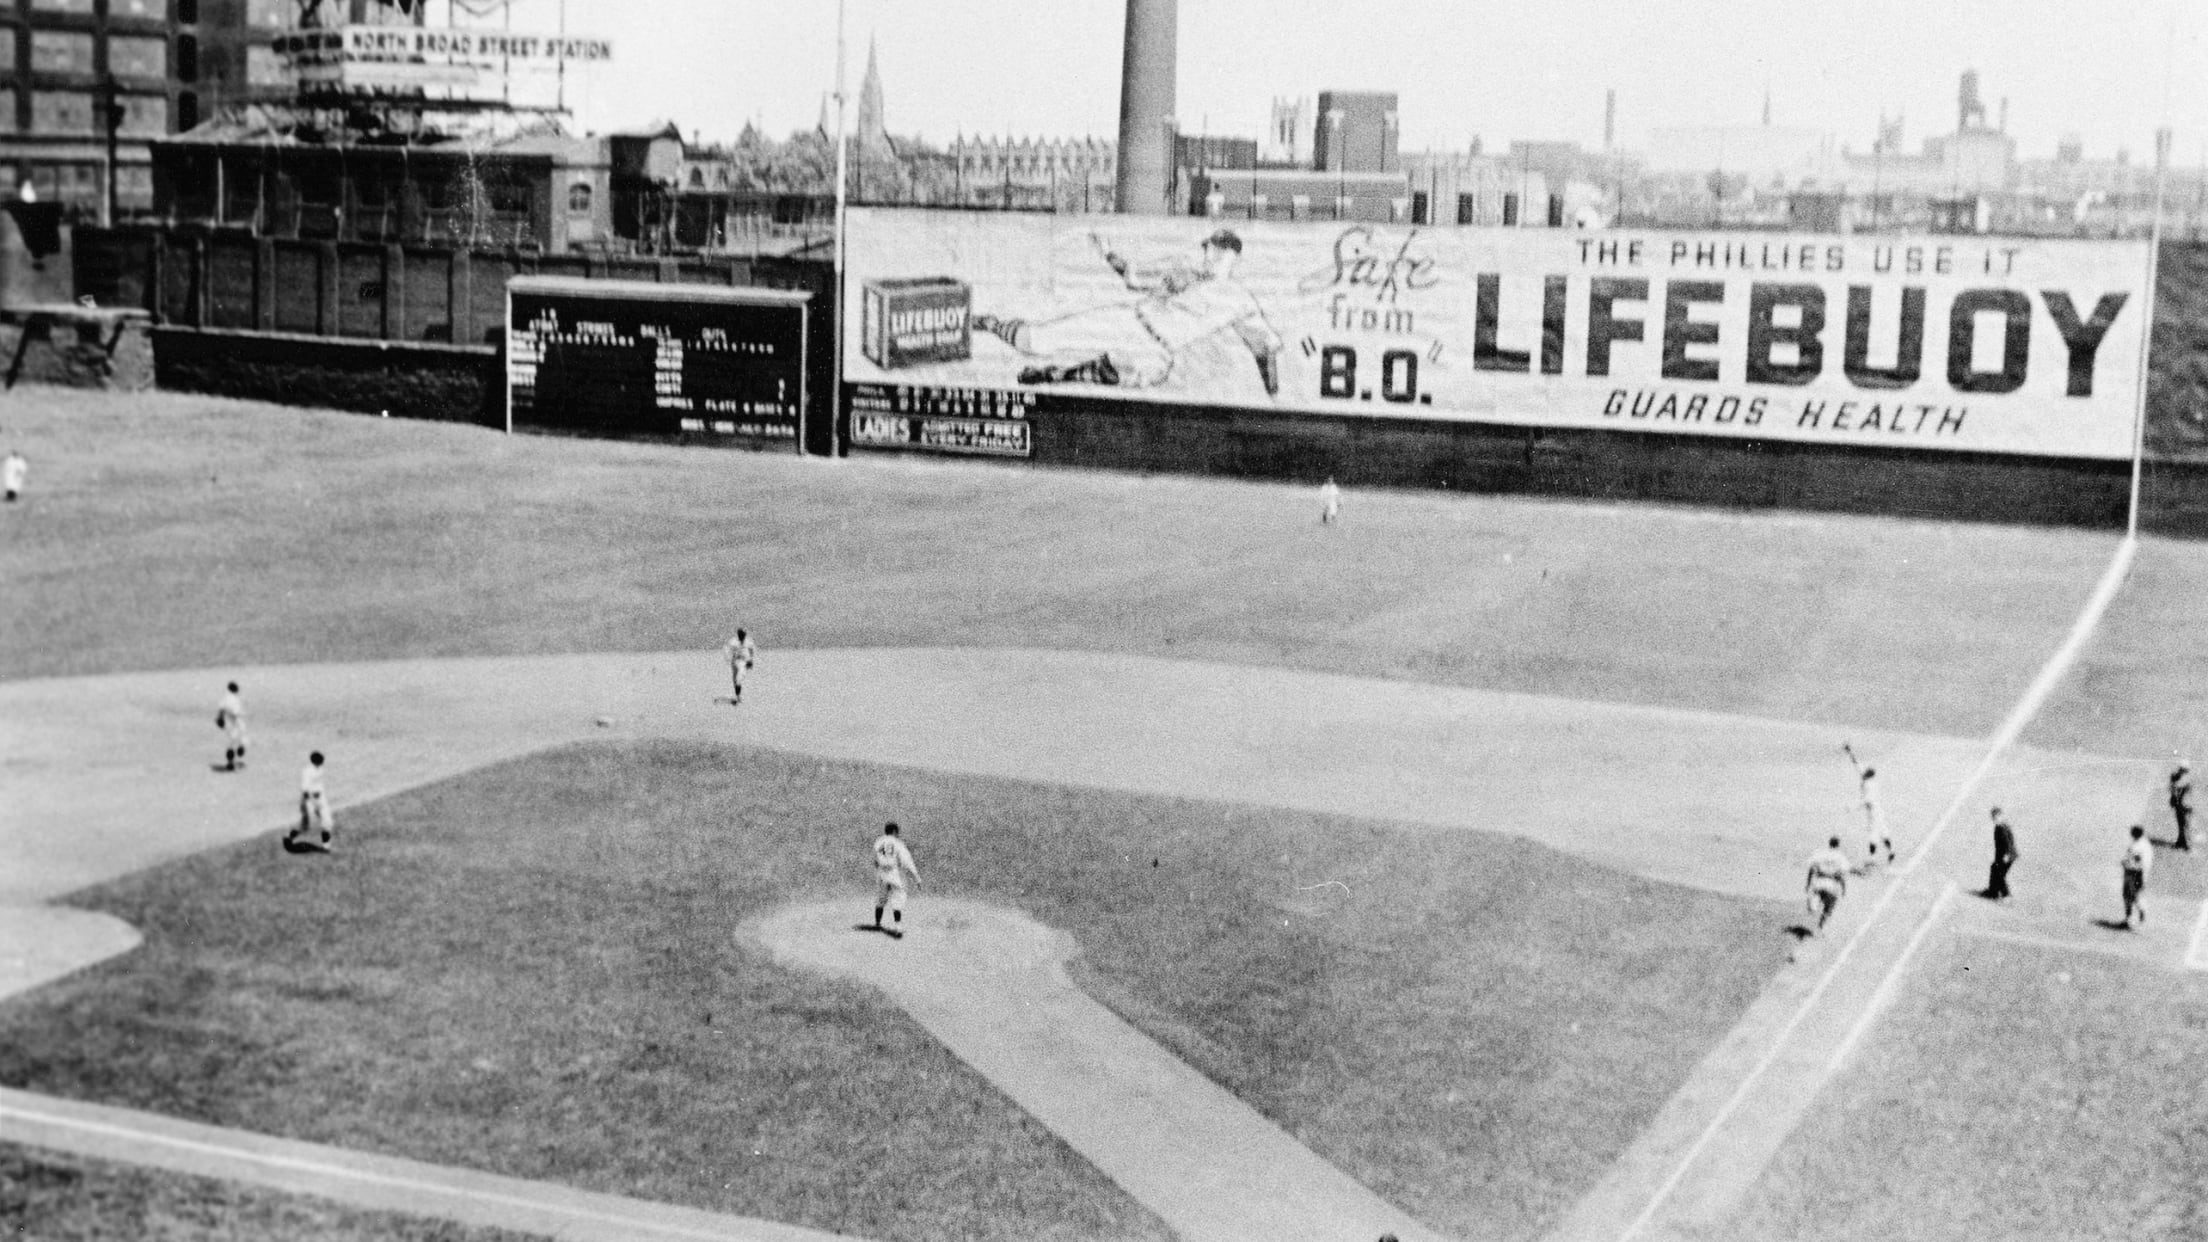 History of Baseball stadiums part III